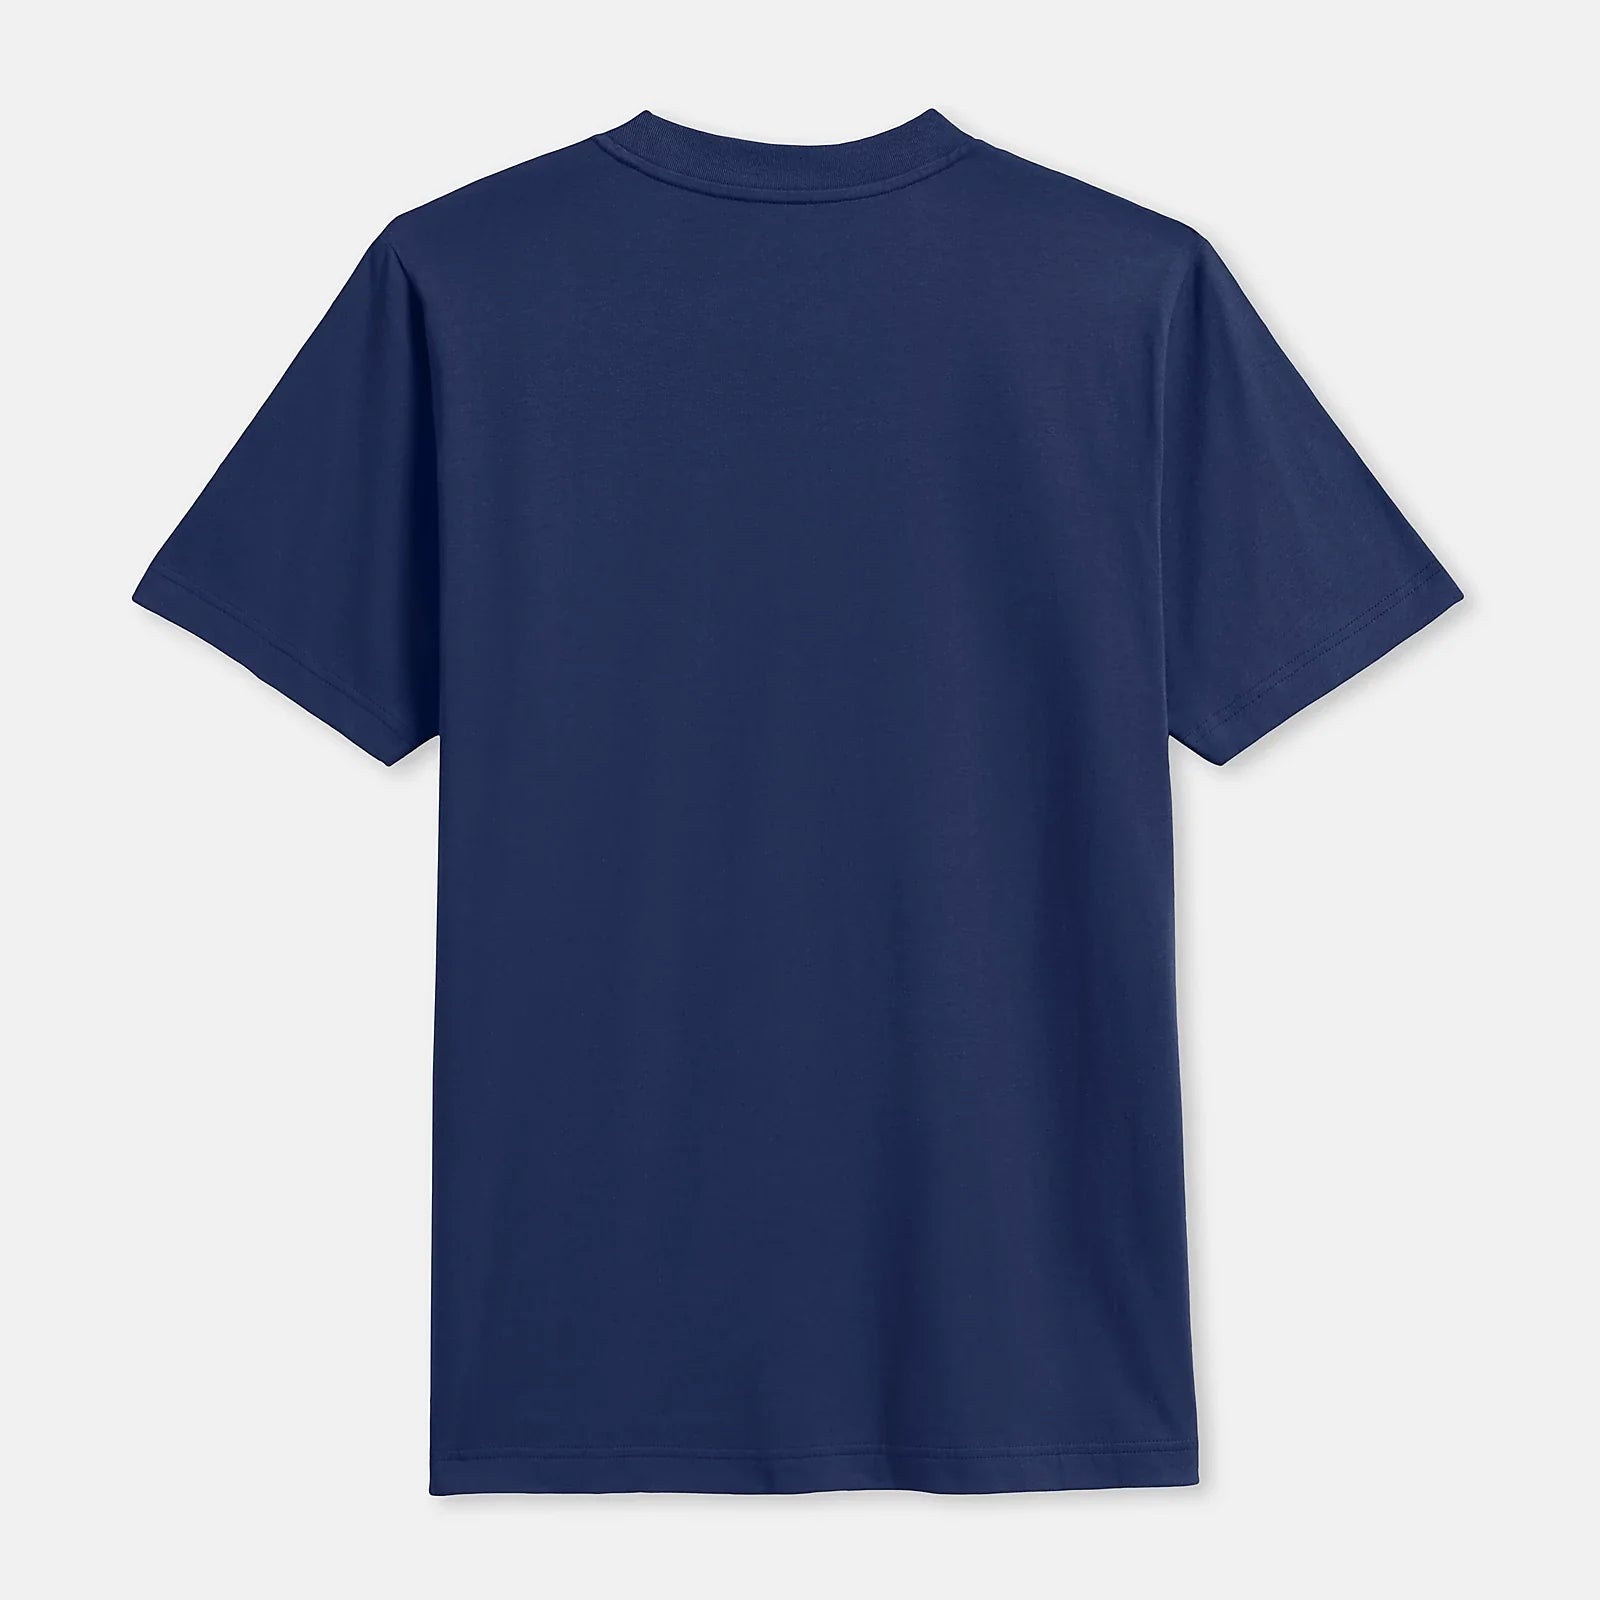 New Balance Women's Navy T-Shirt Back View